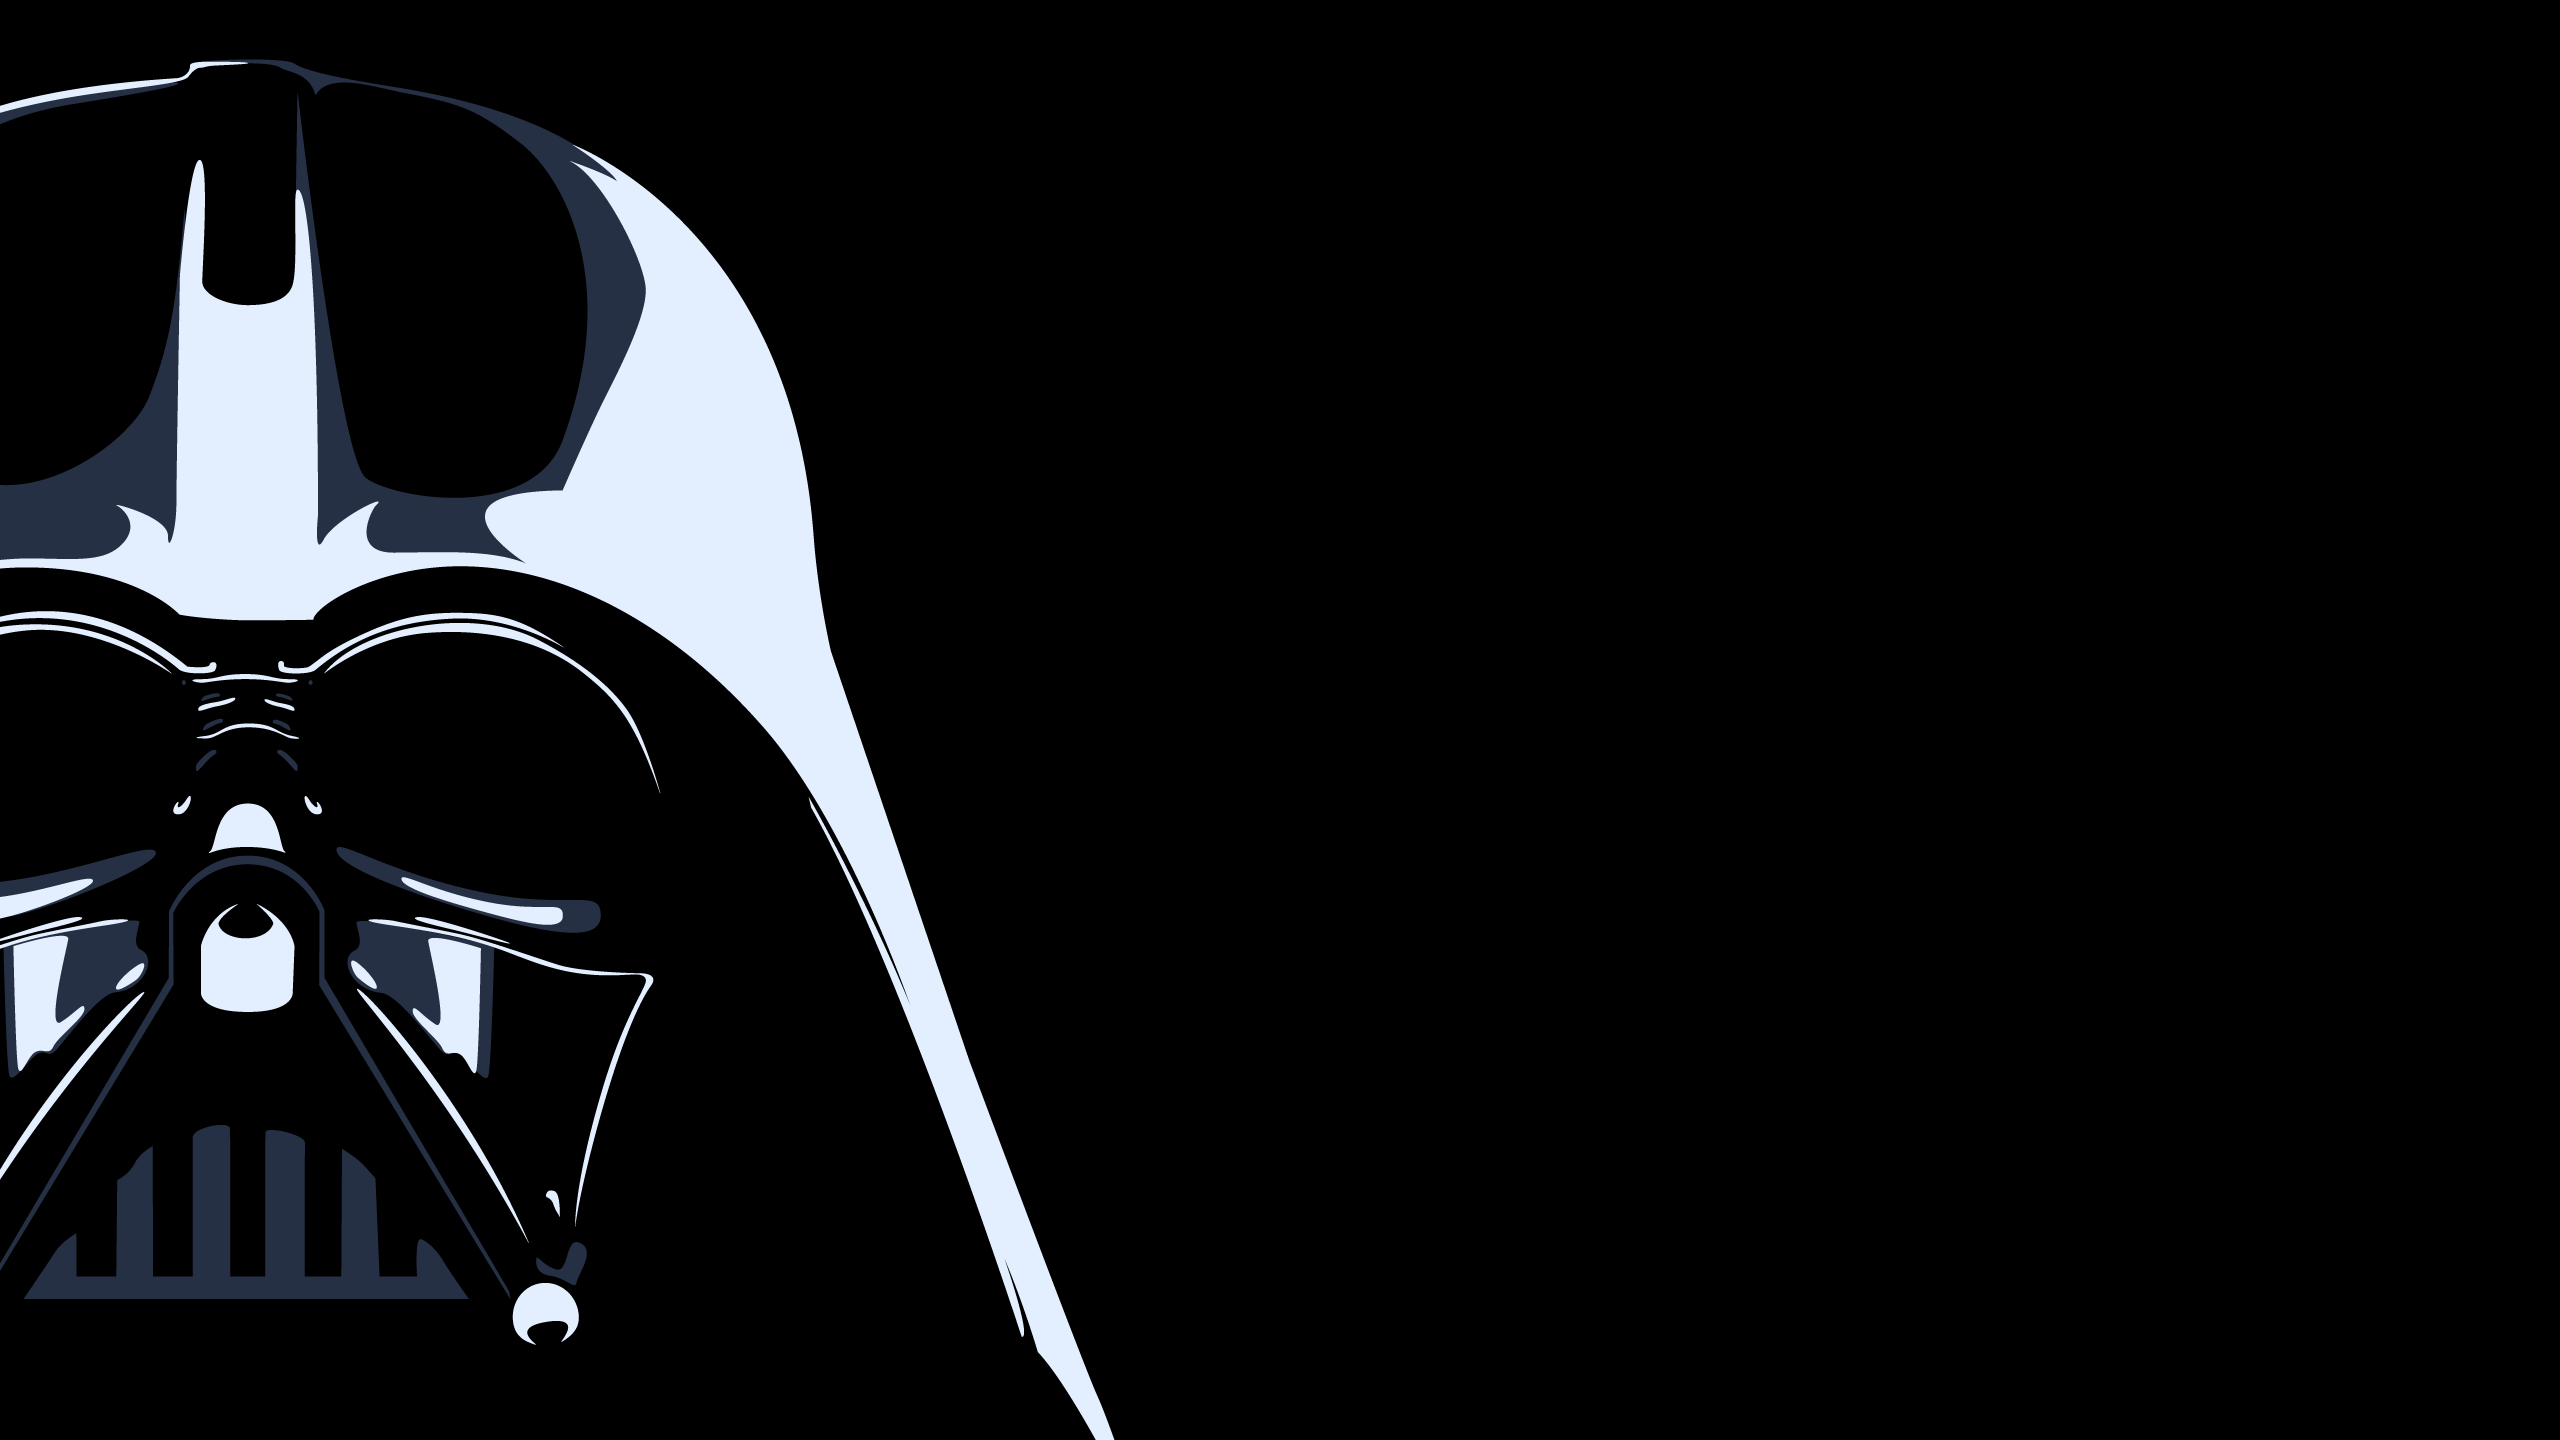 Darth Vader Background Wallpaper